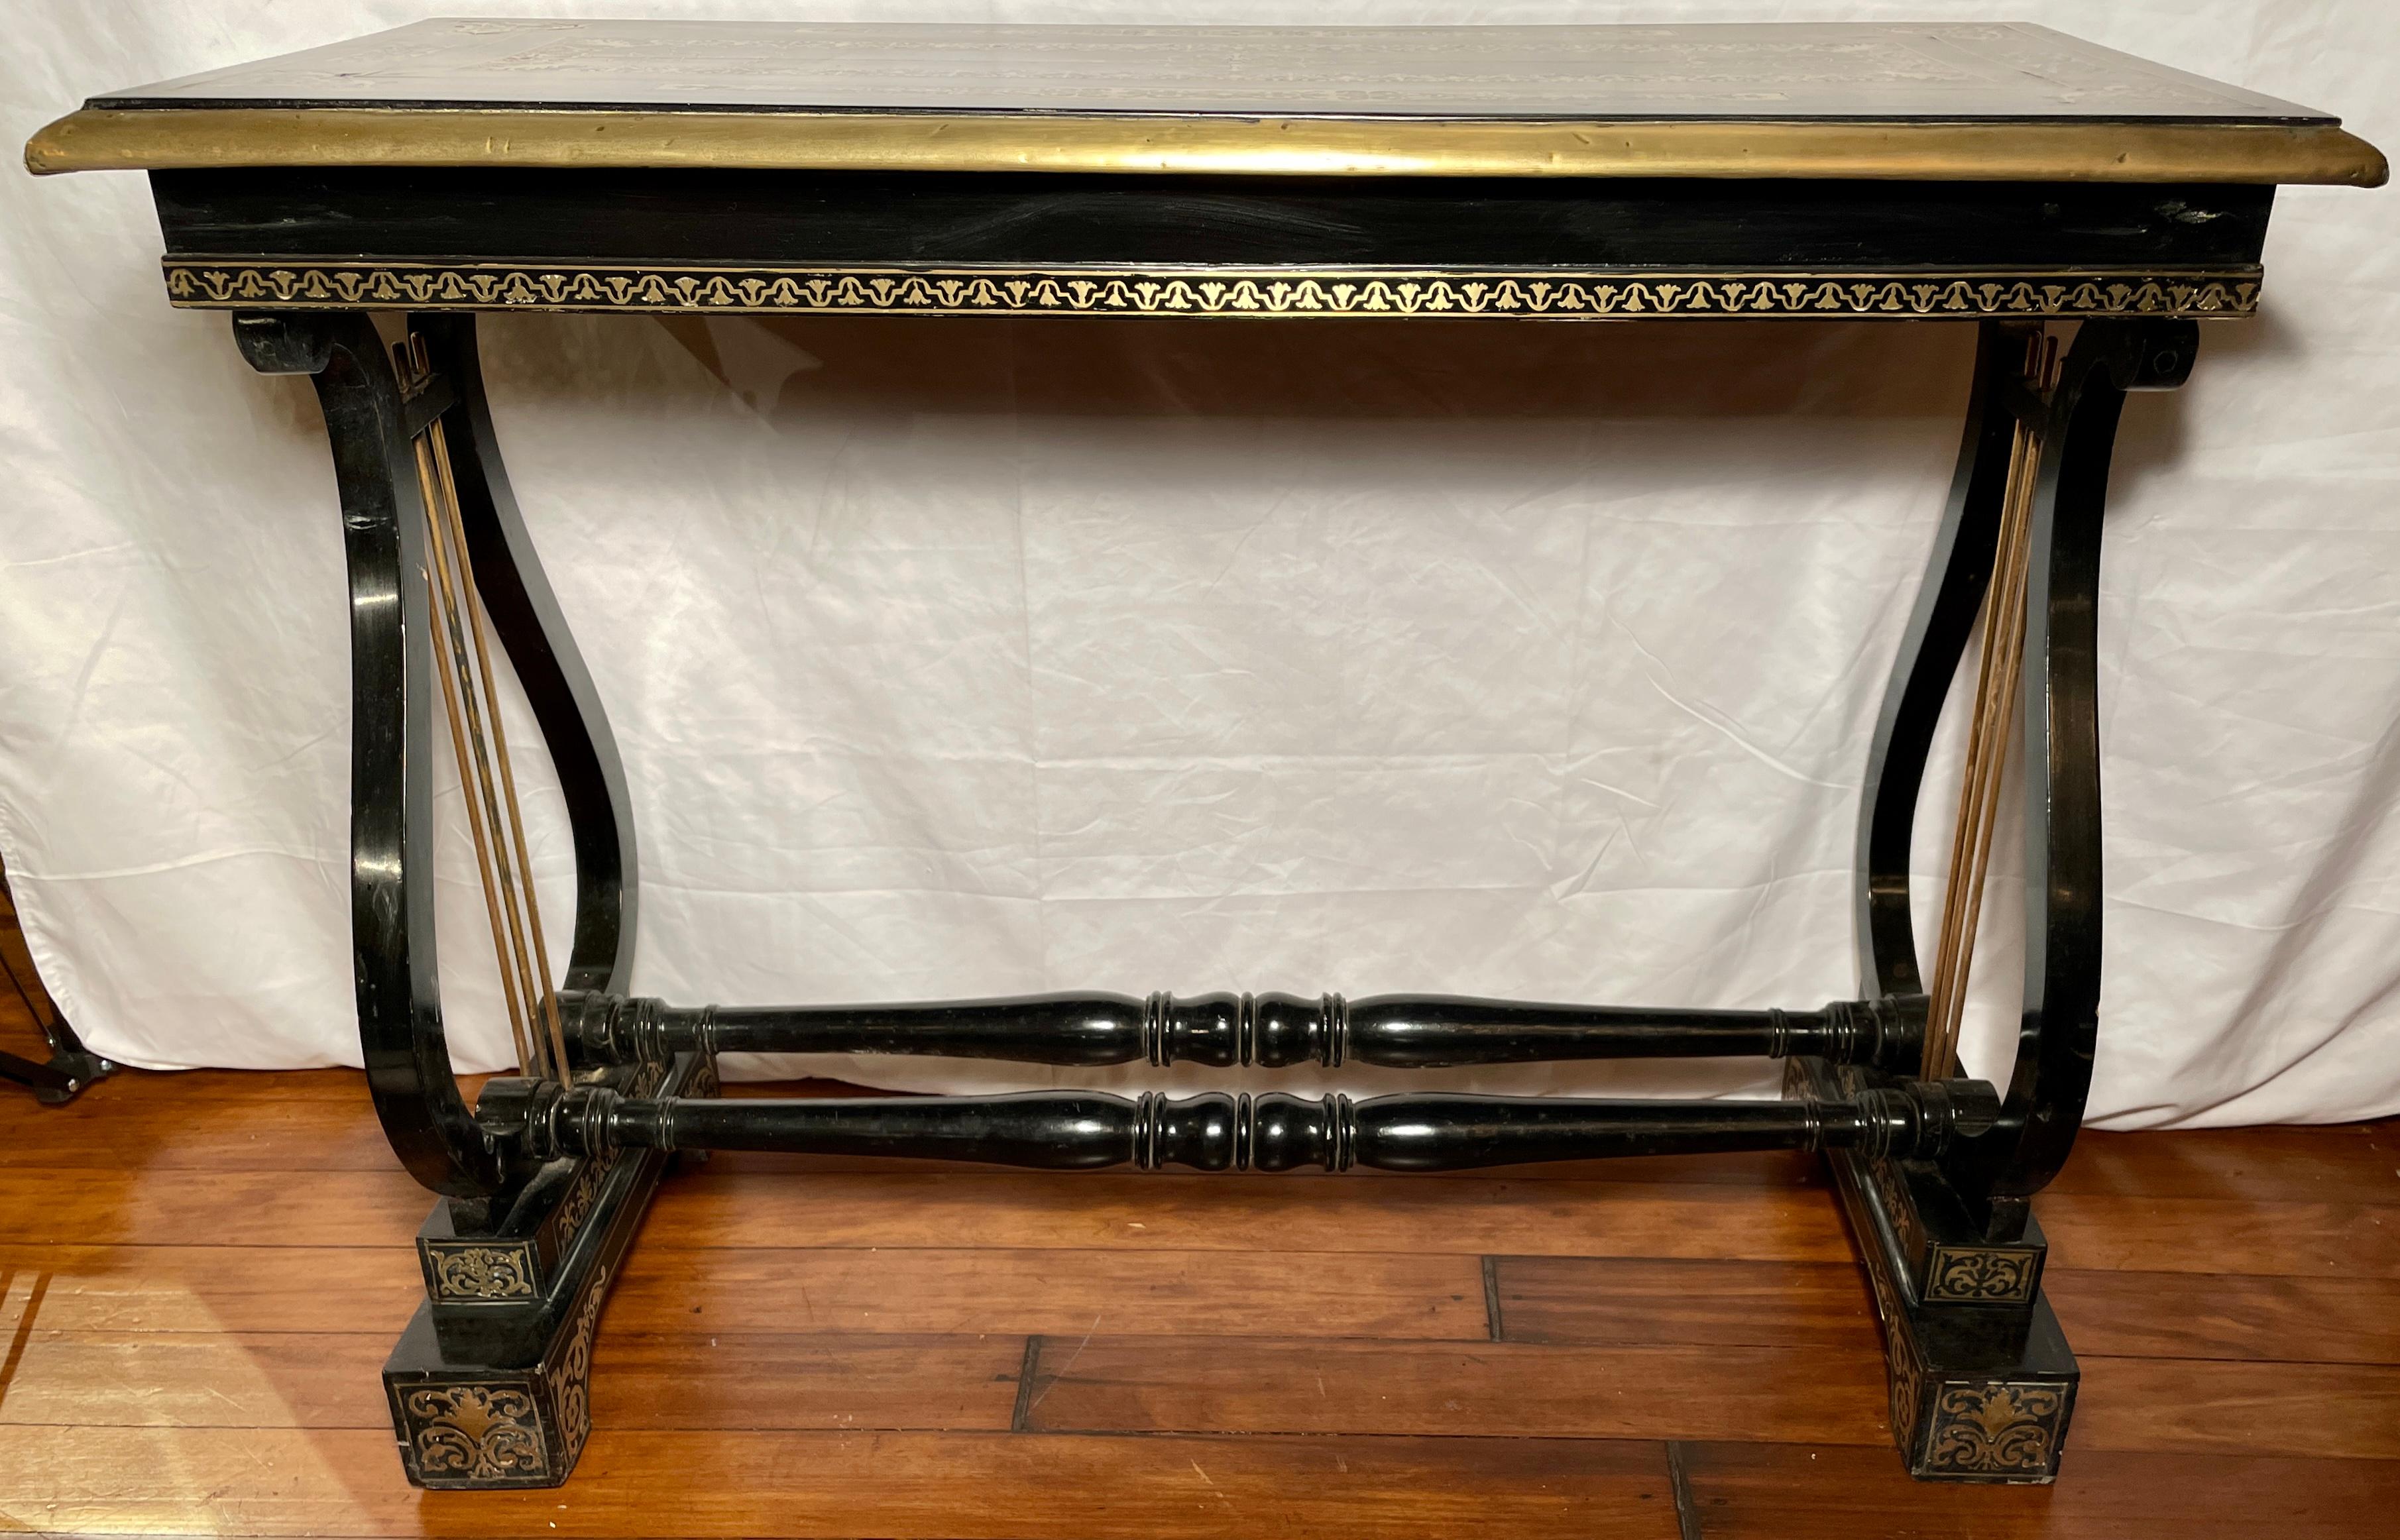 Antique English Regency Inlaid ebonized wood table, circa 1890.